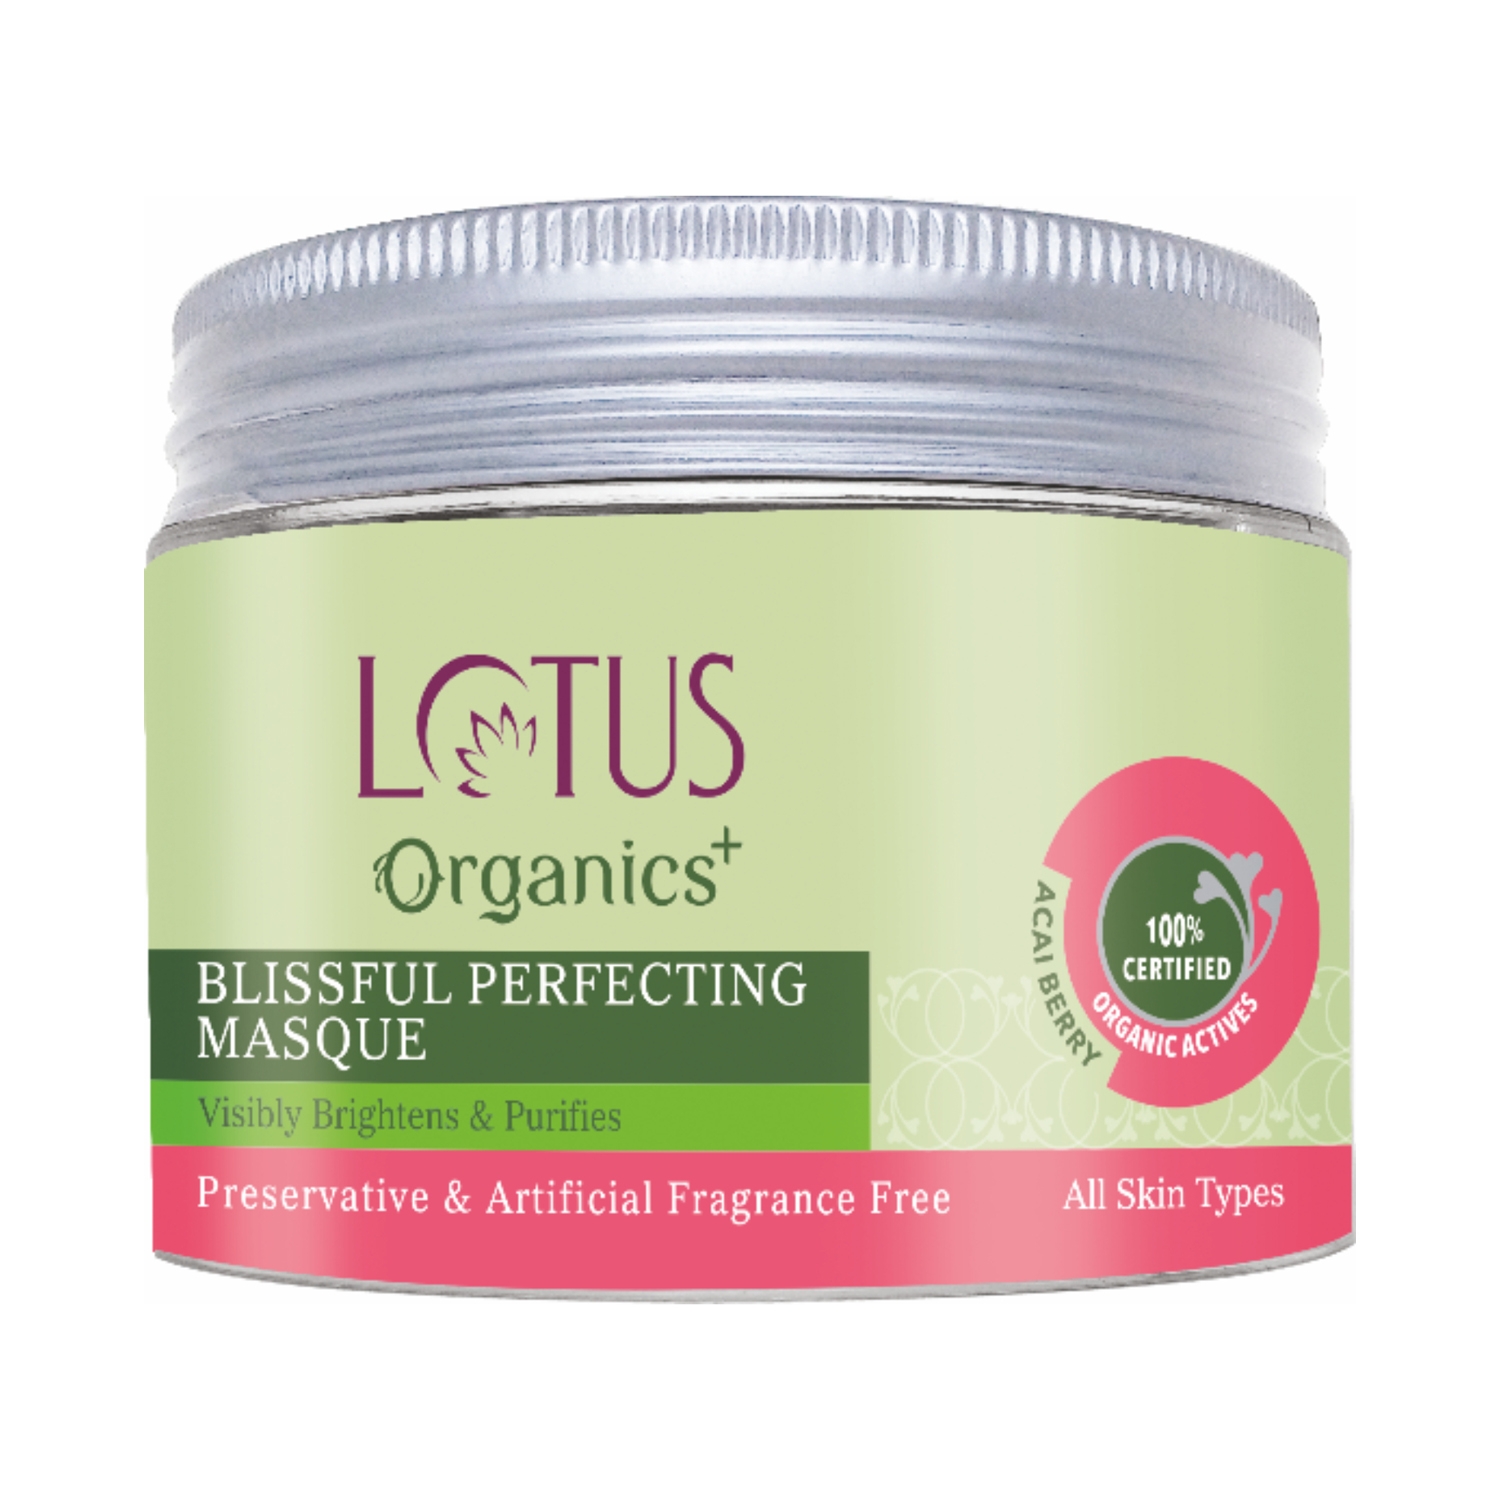 Lotus Organics Blissful Perfecting Masque (50g)